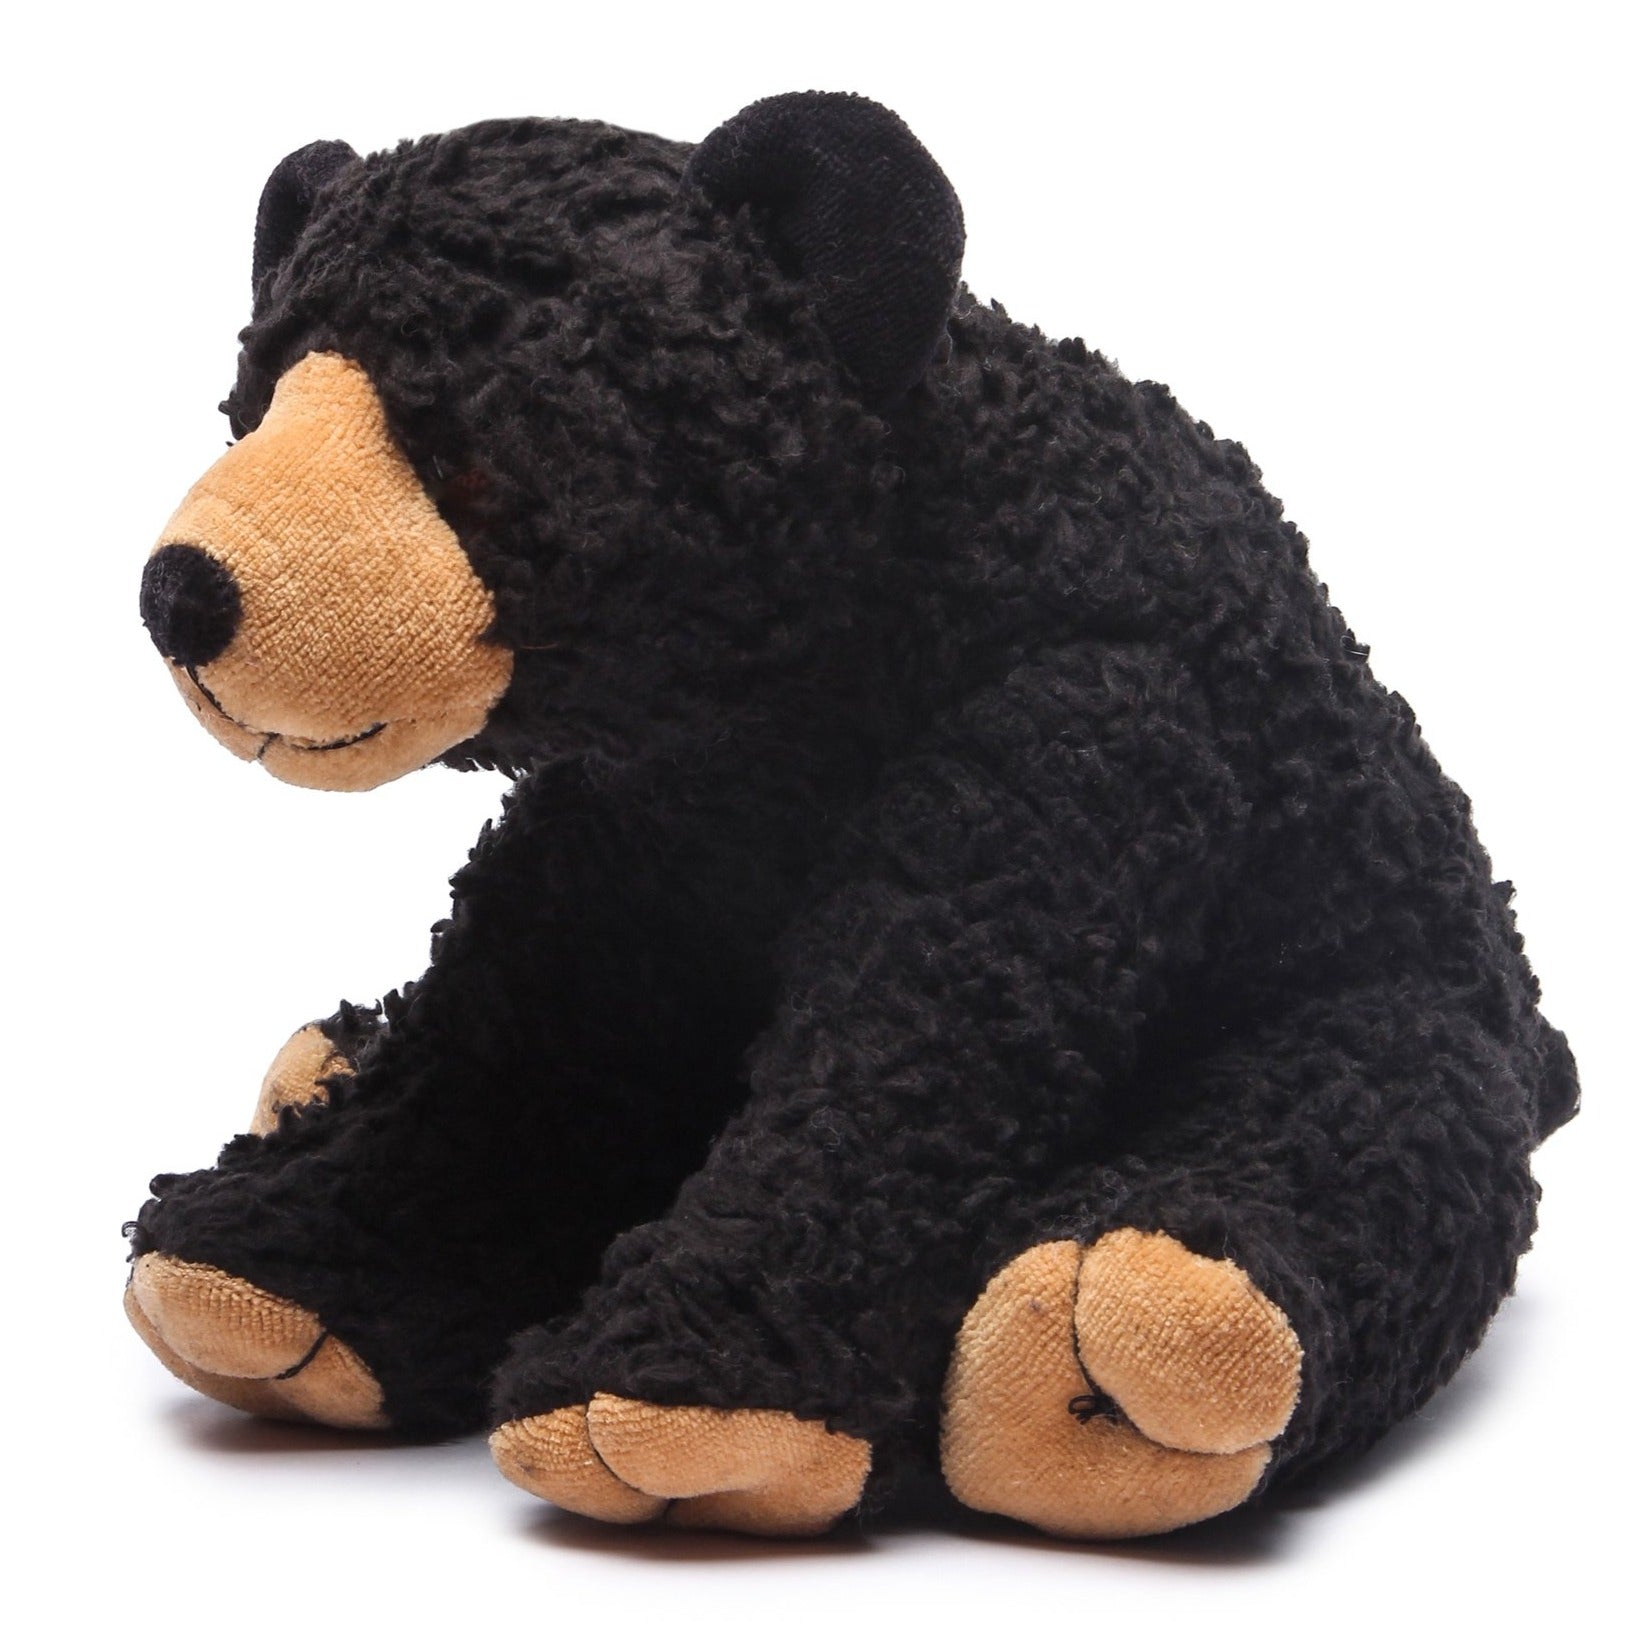 black bear stuffed animal